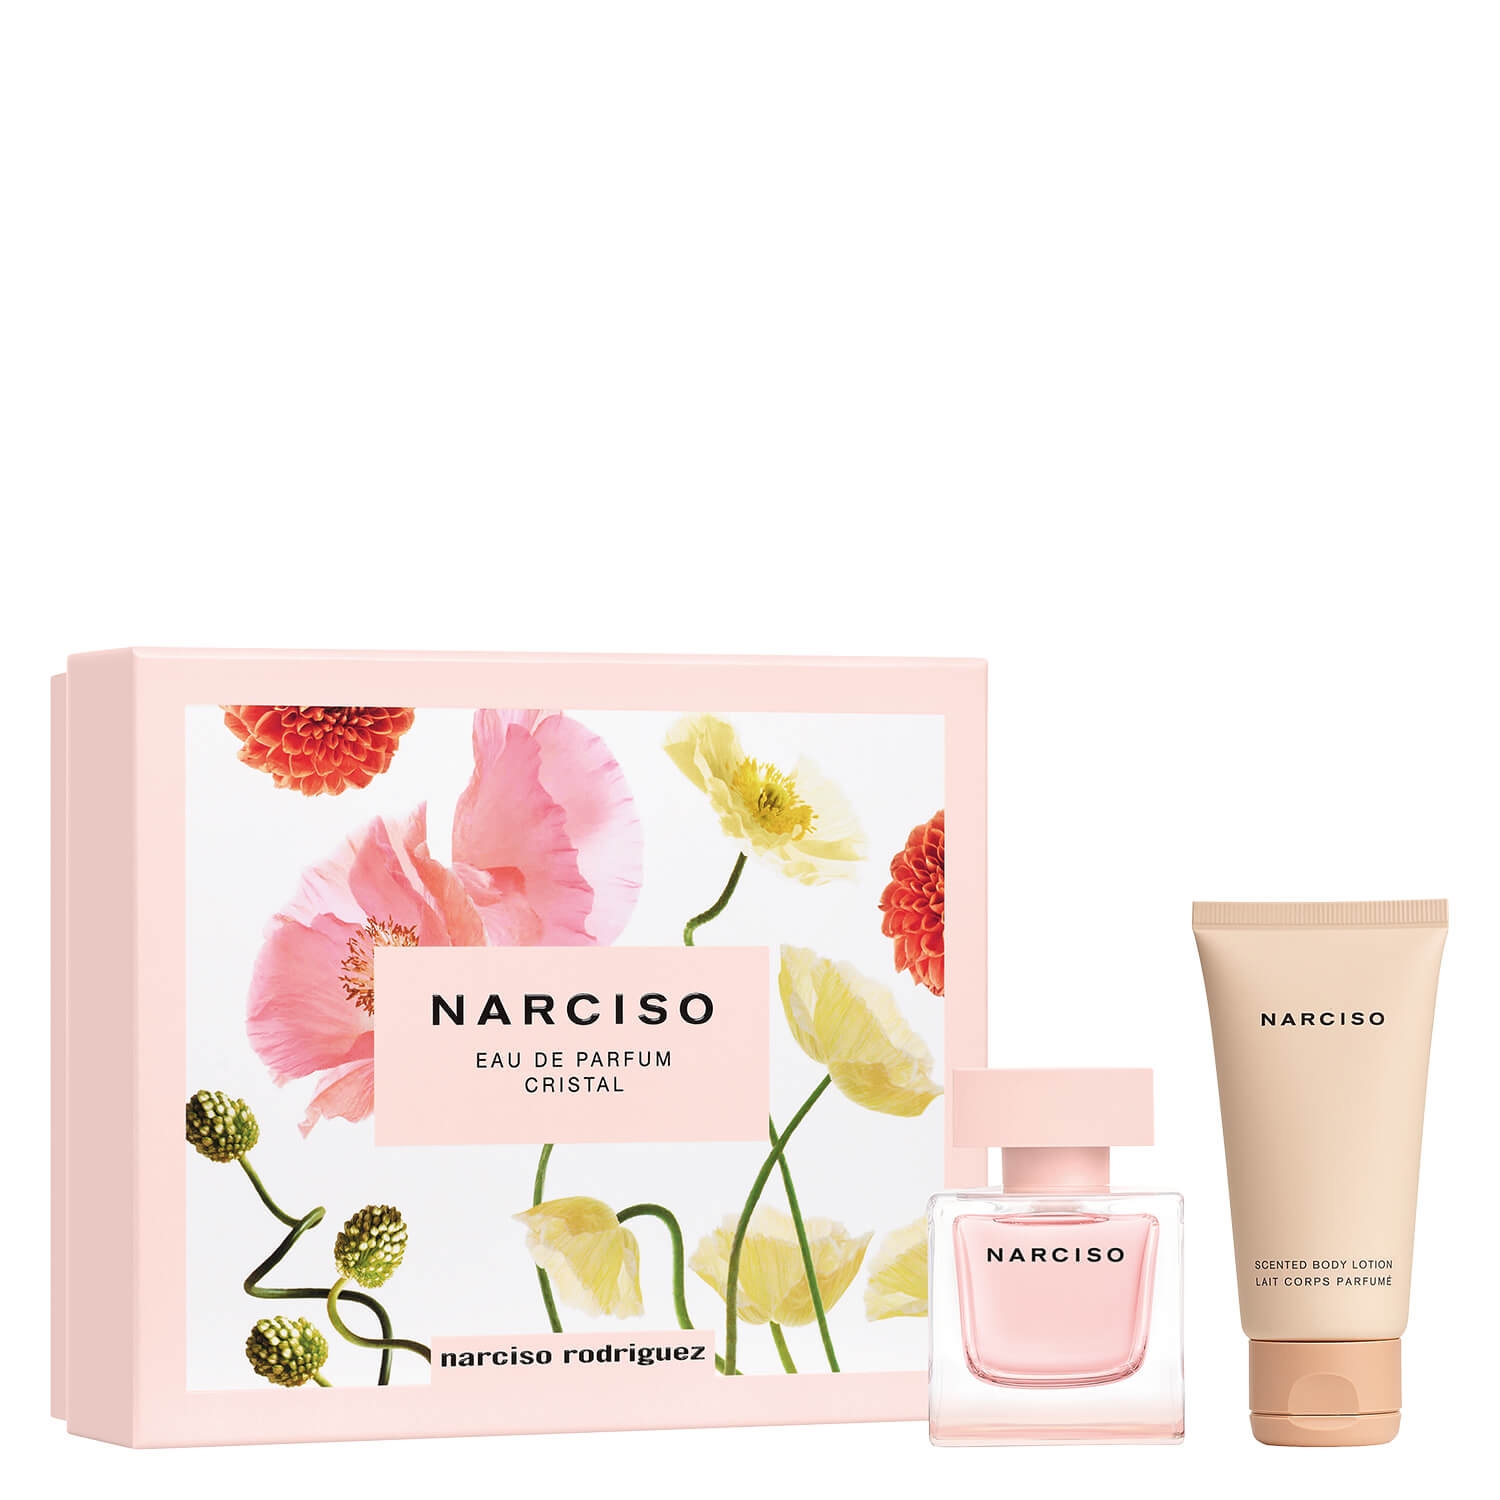 Product image from Narciso – Eau de Parfum Cristal Spring Set